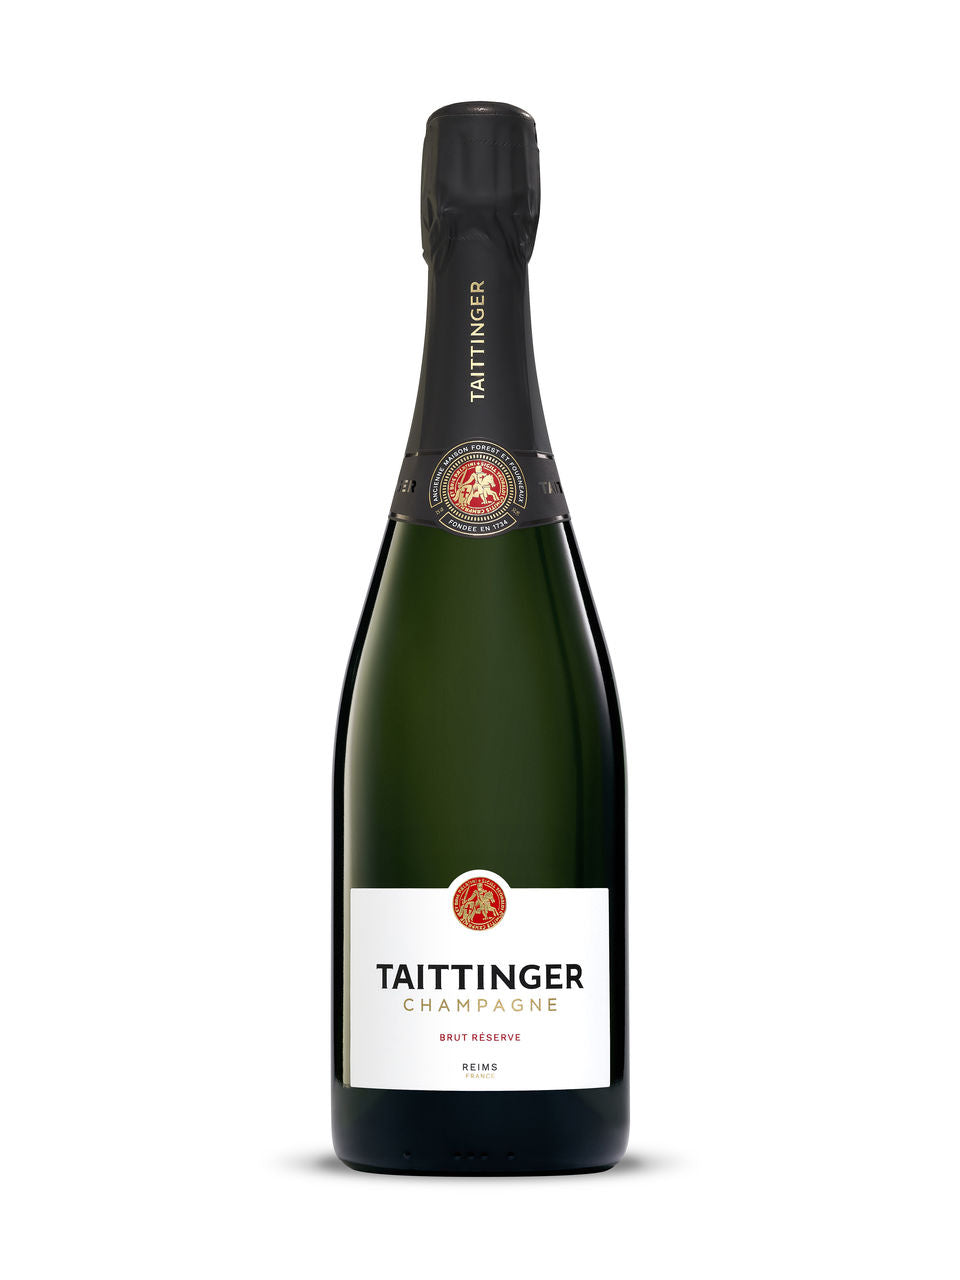 Taittinger Brut Réserve Champagne 750 ml bottle